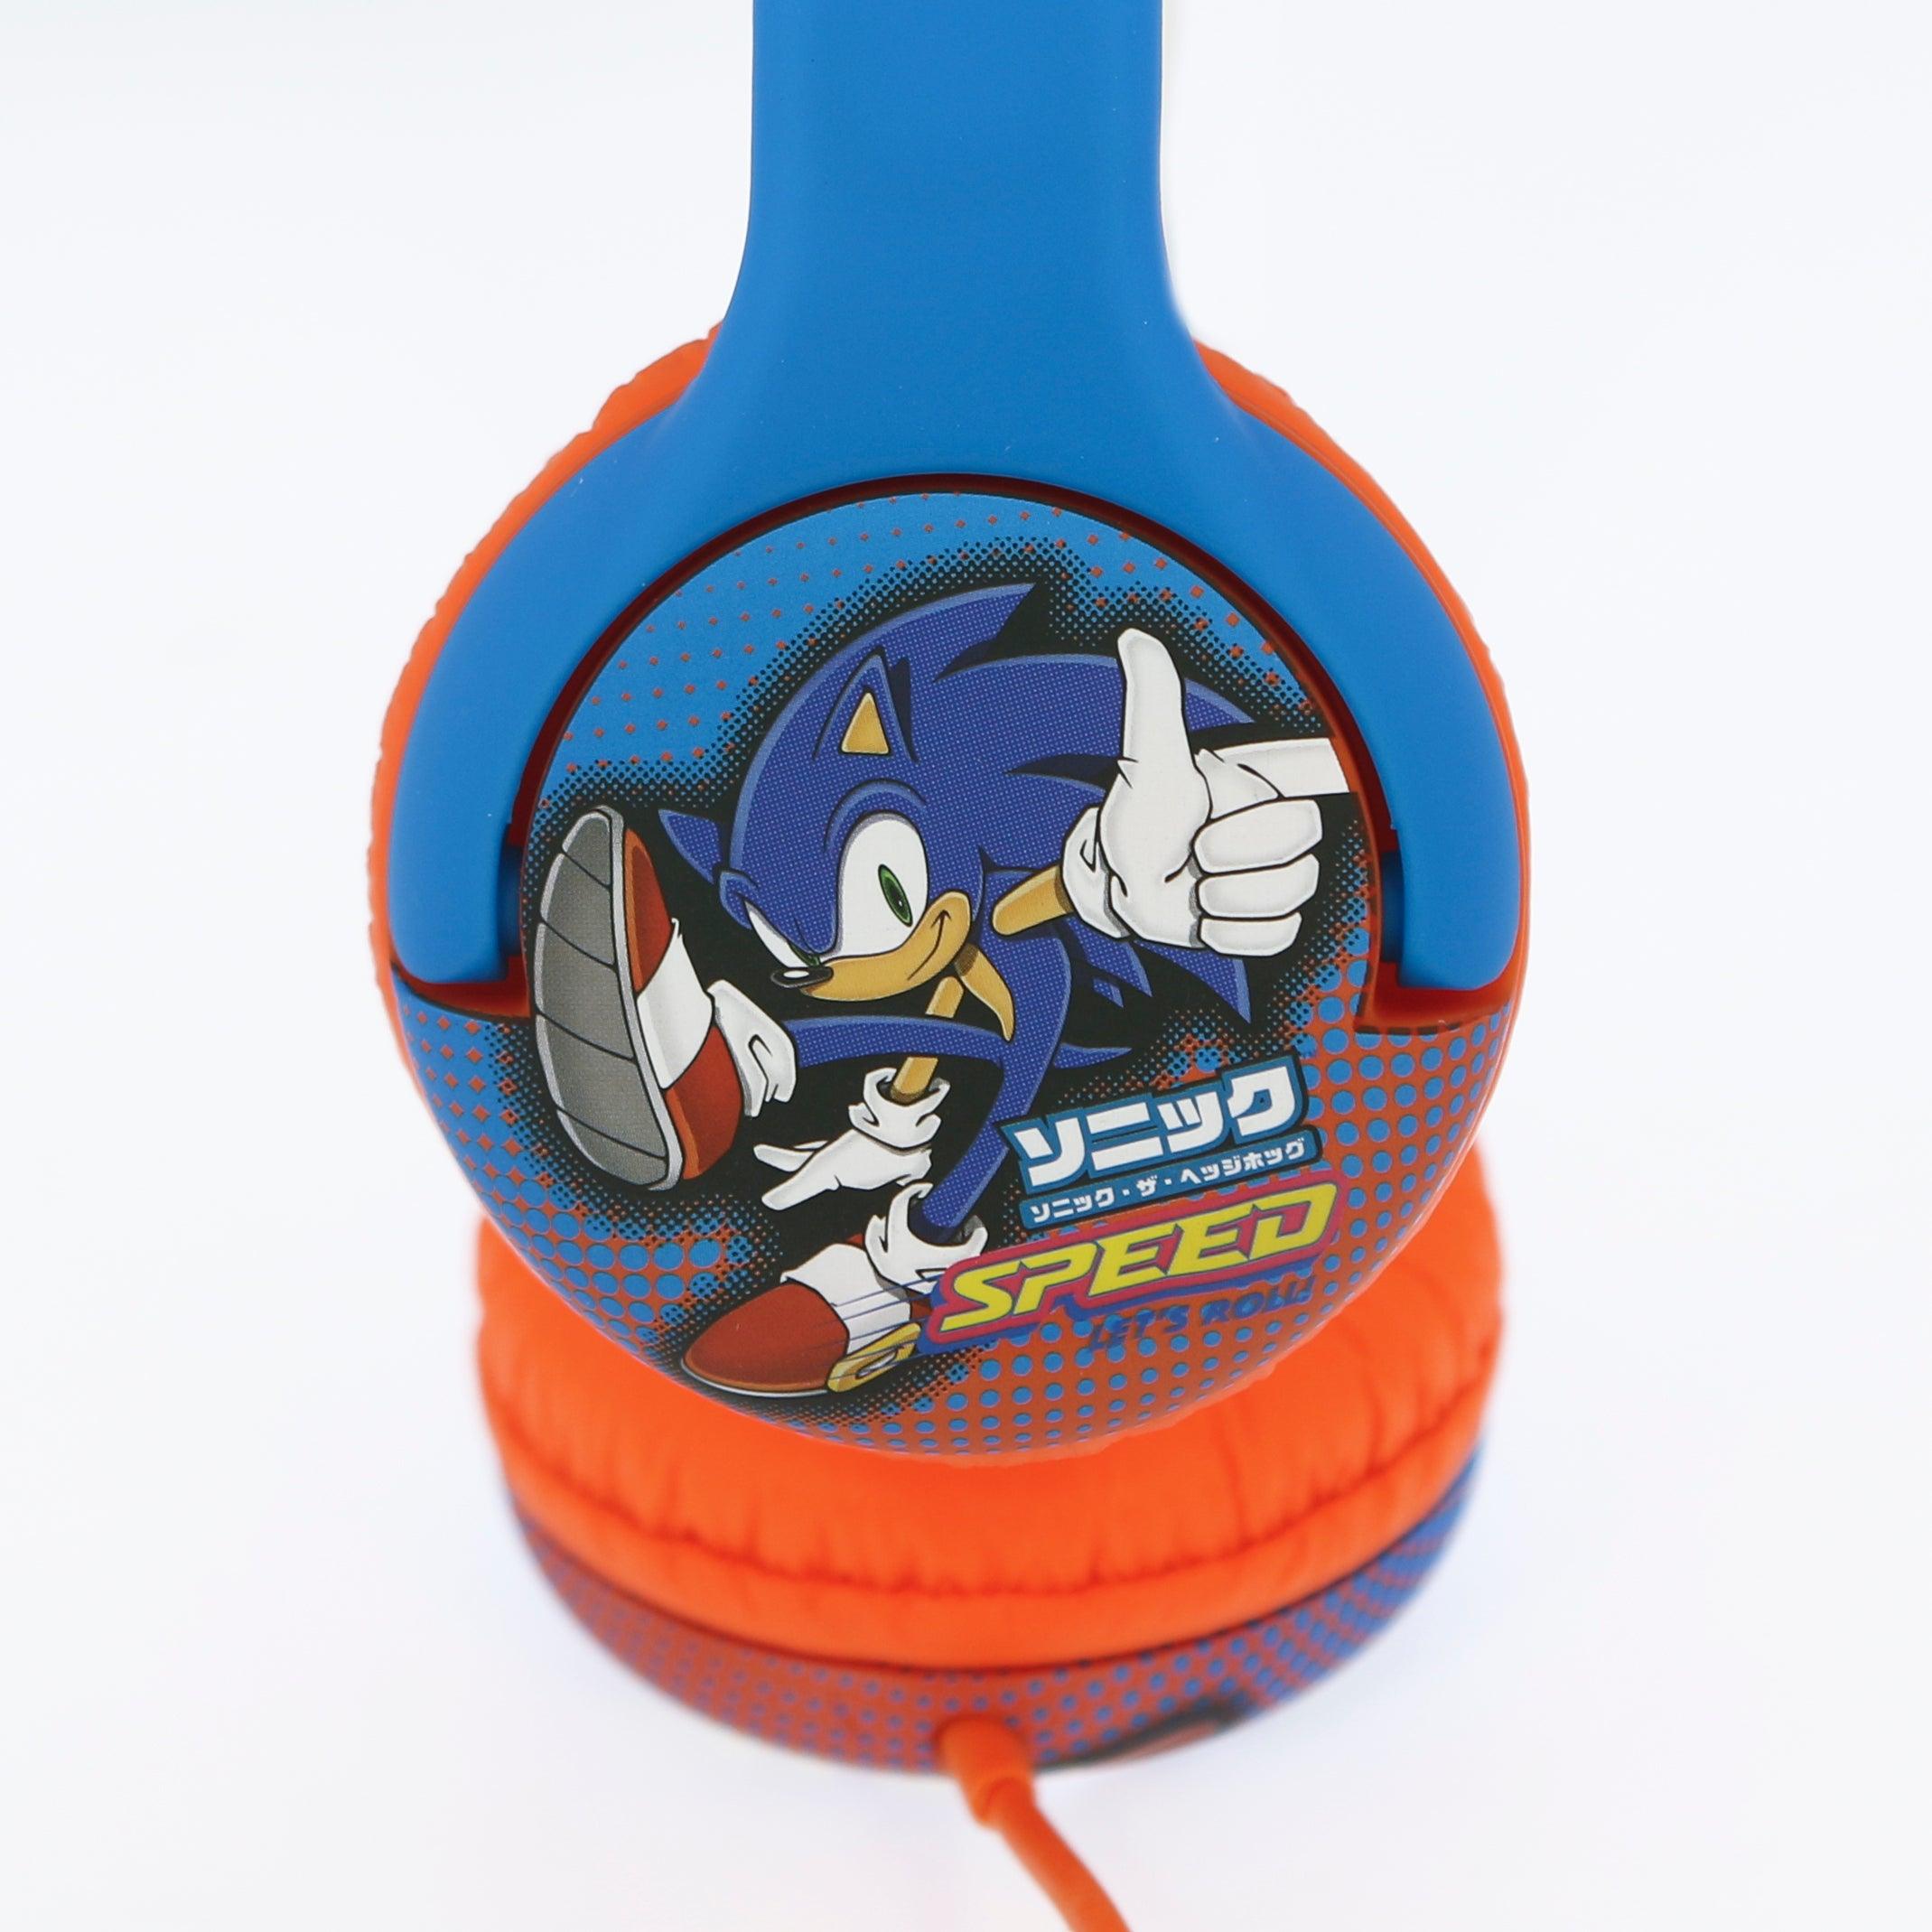 SEGA Sonic The Hedgehog Kids Headphones - childrensheadphones.co.uk